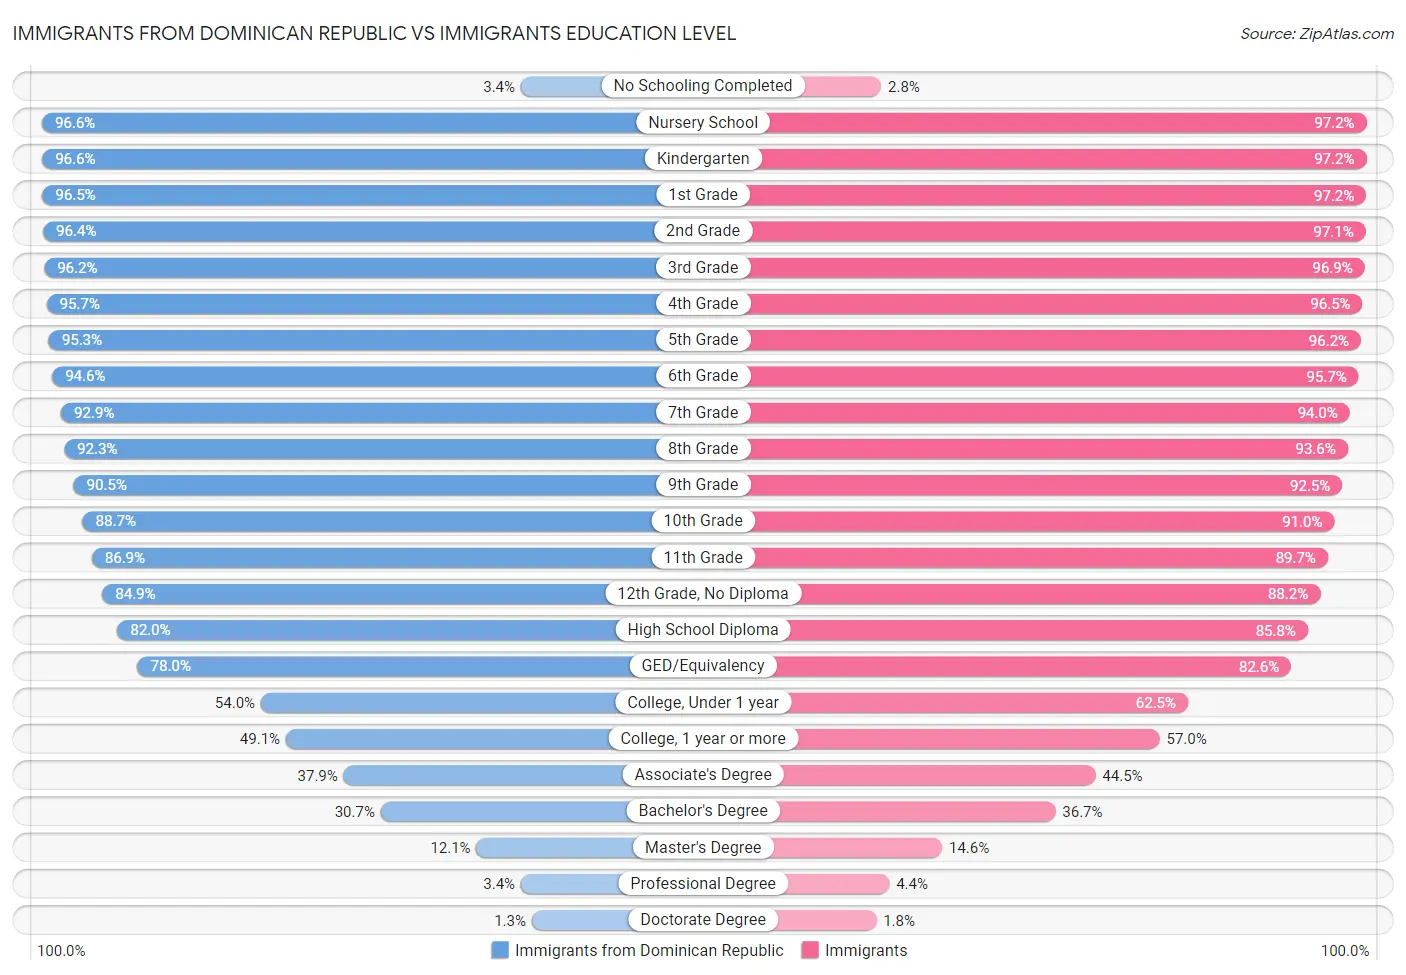 Immigrants from Dominican Republic vs Immigrants Education Level